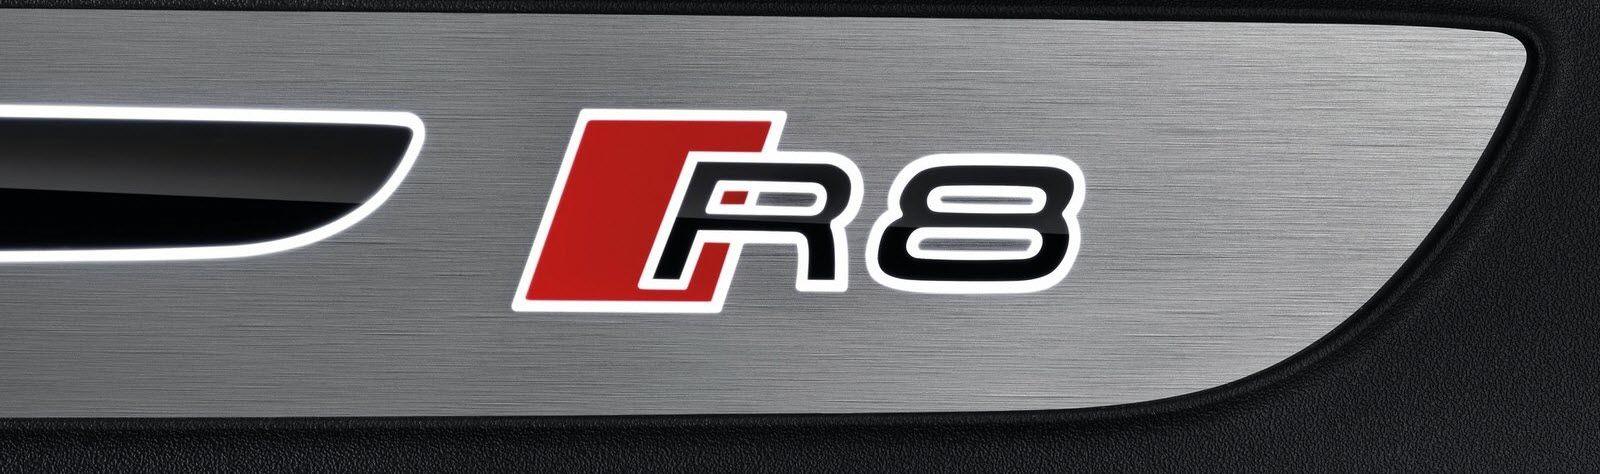 Audi R8 Logo - Hypercarz | Audi R8 V10 Plus Spyder